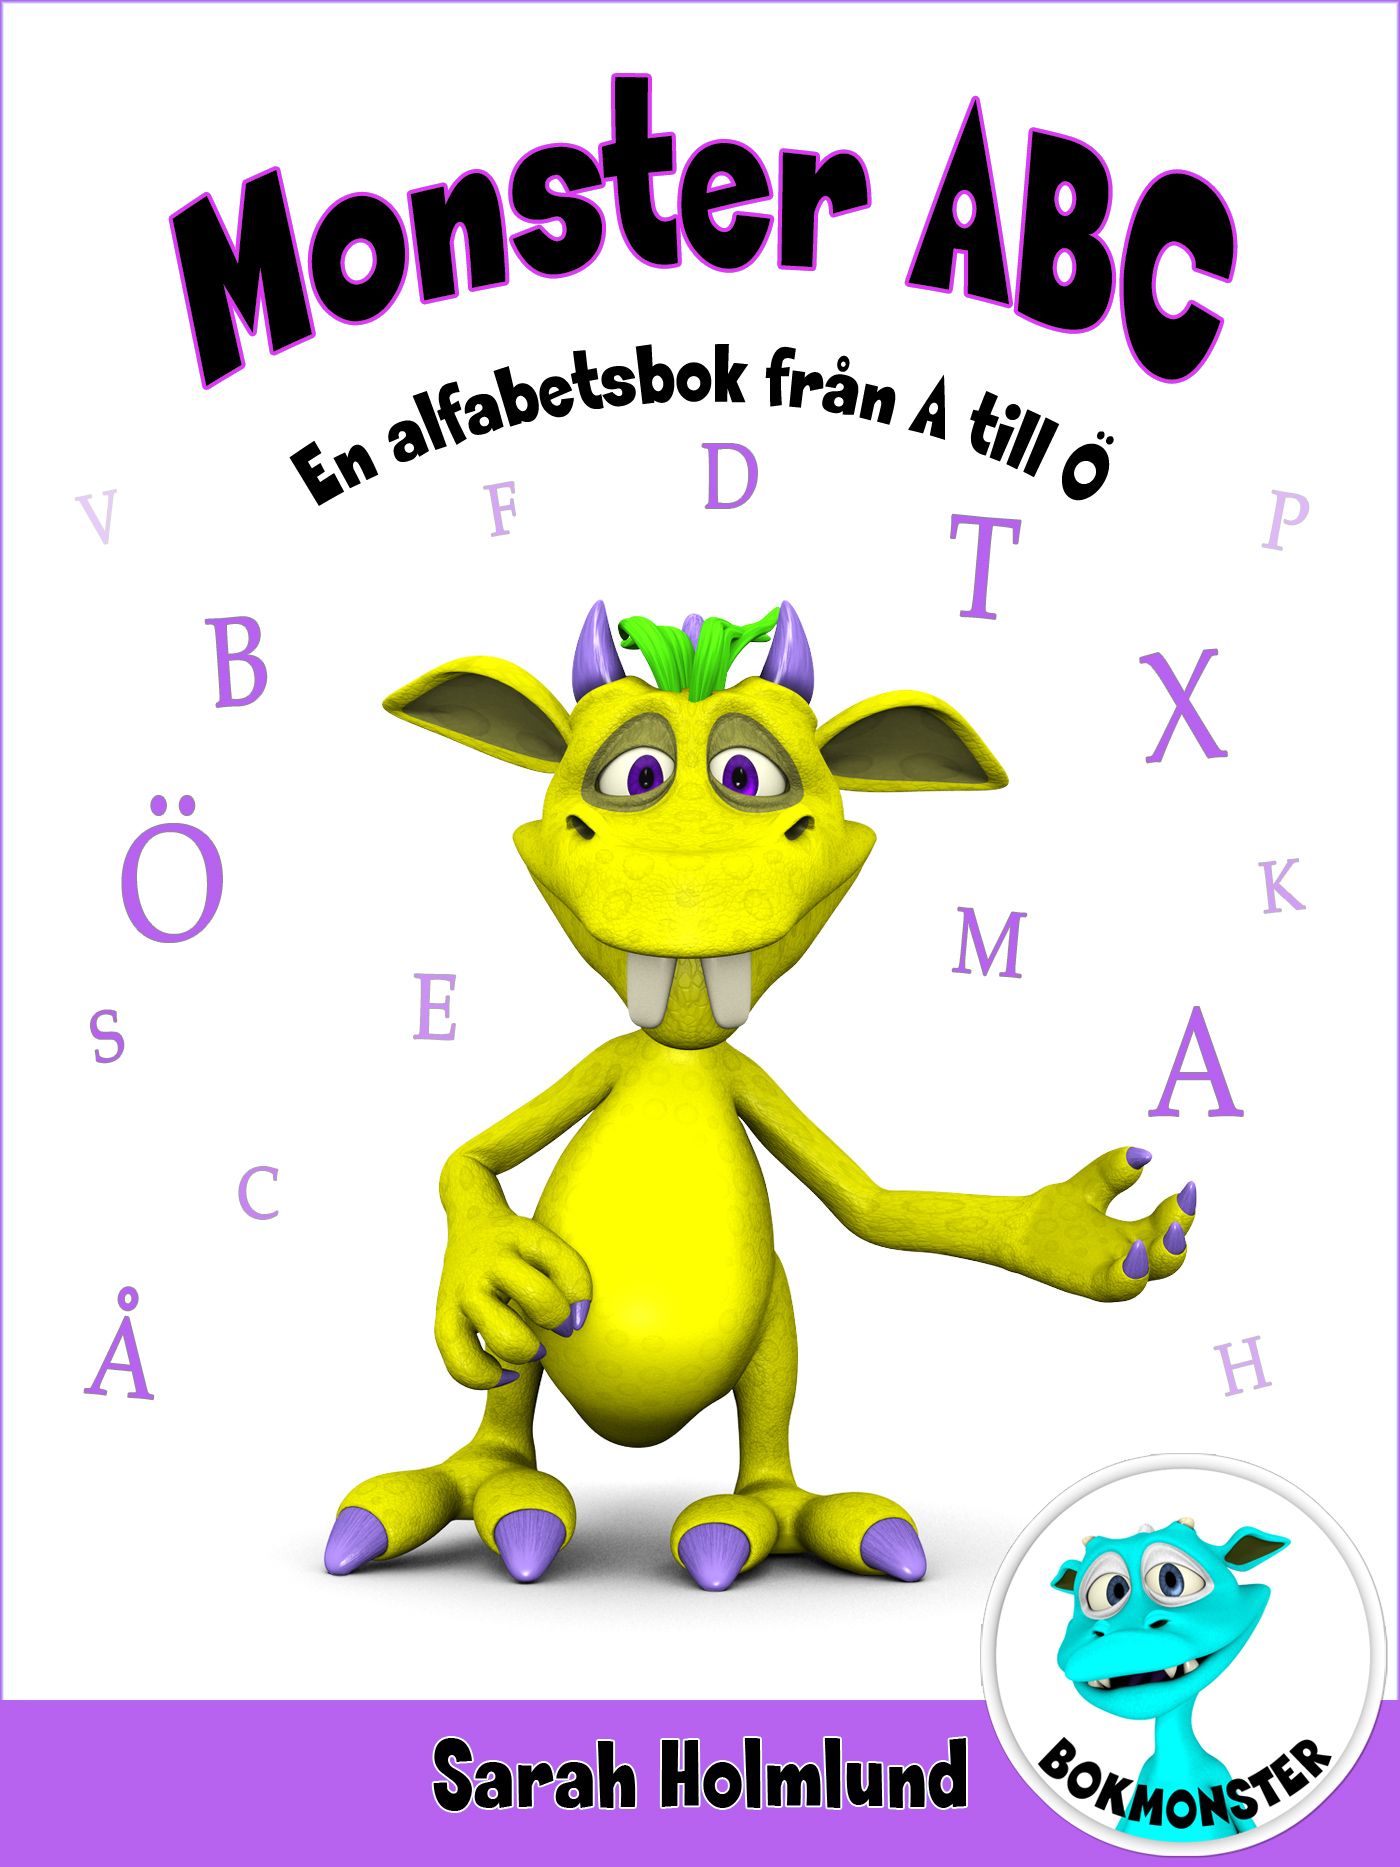 Monster ABC. En alfabetsbok från A till Ö, e-bog af Sarah Holmlund